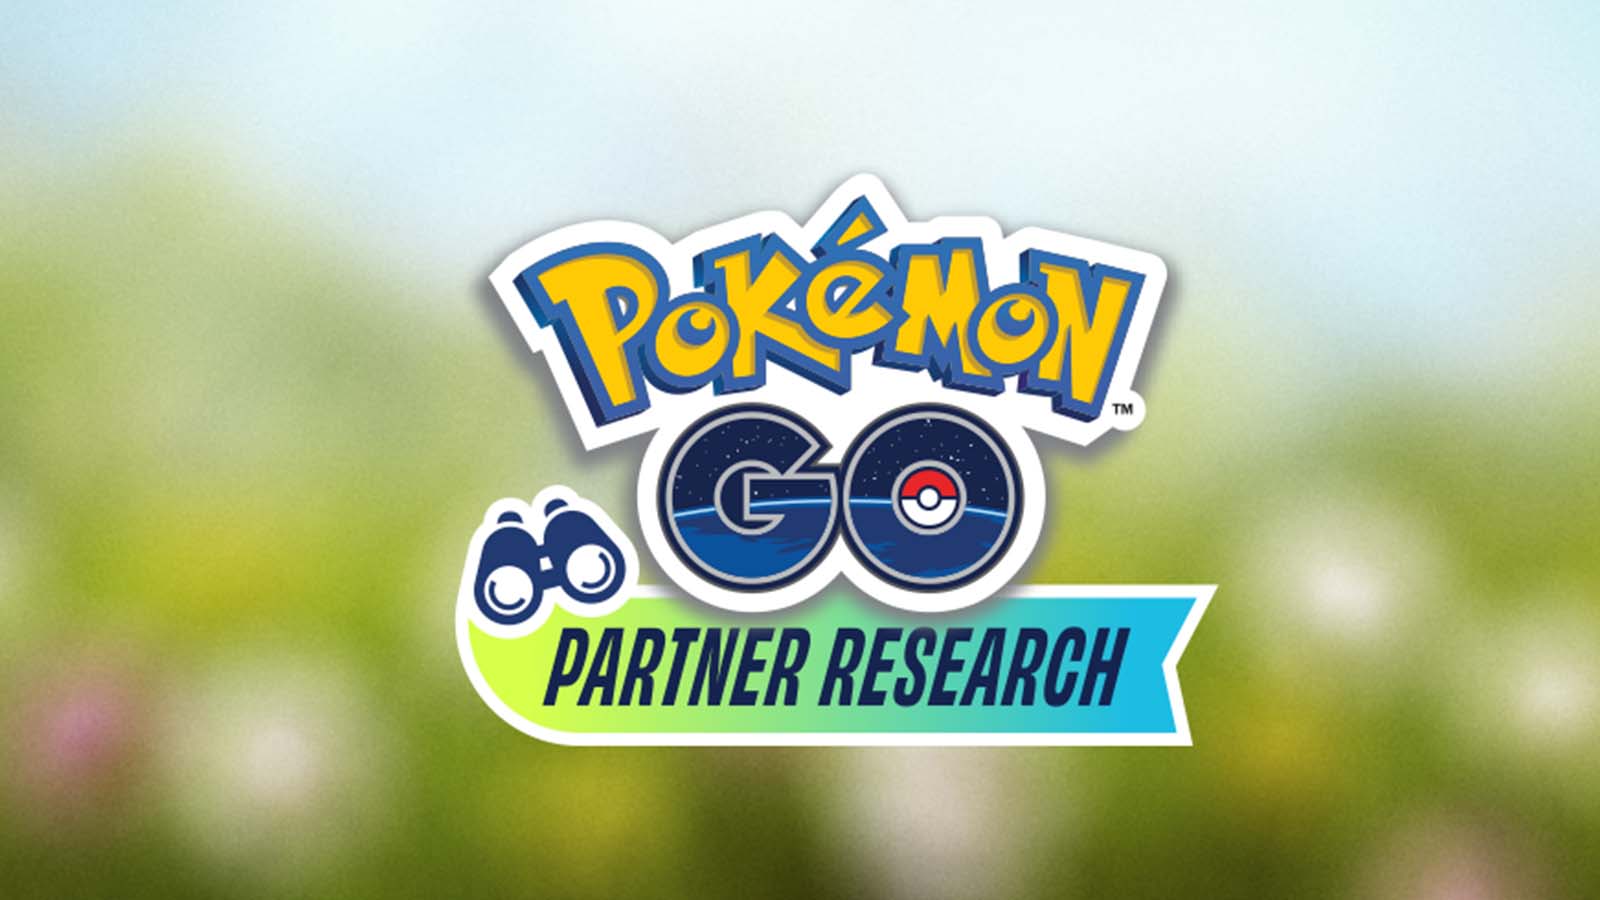 Pokemon Go Partner Research